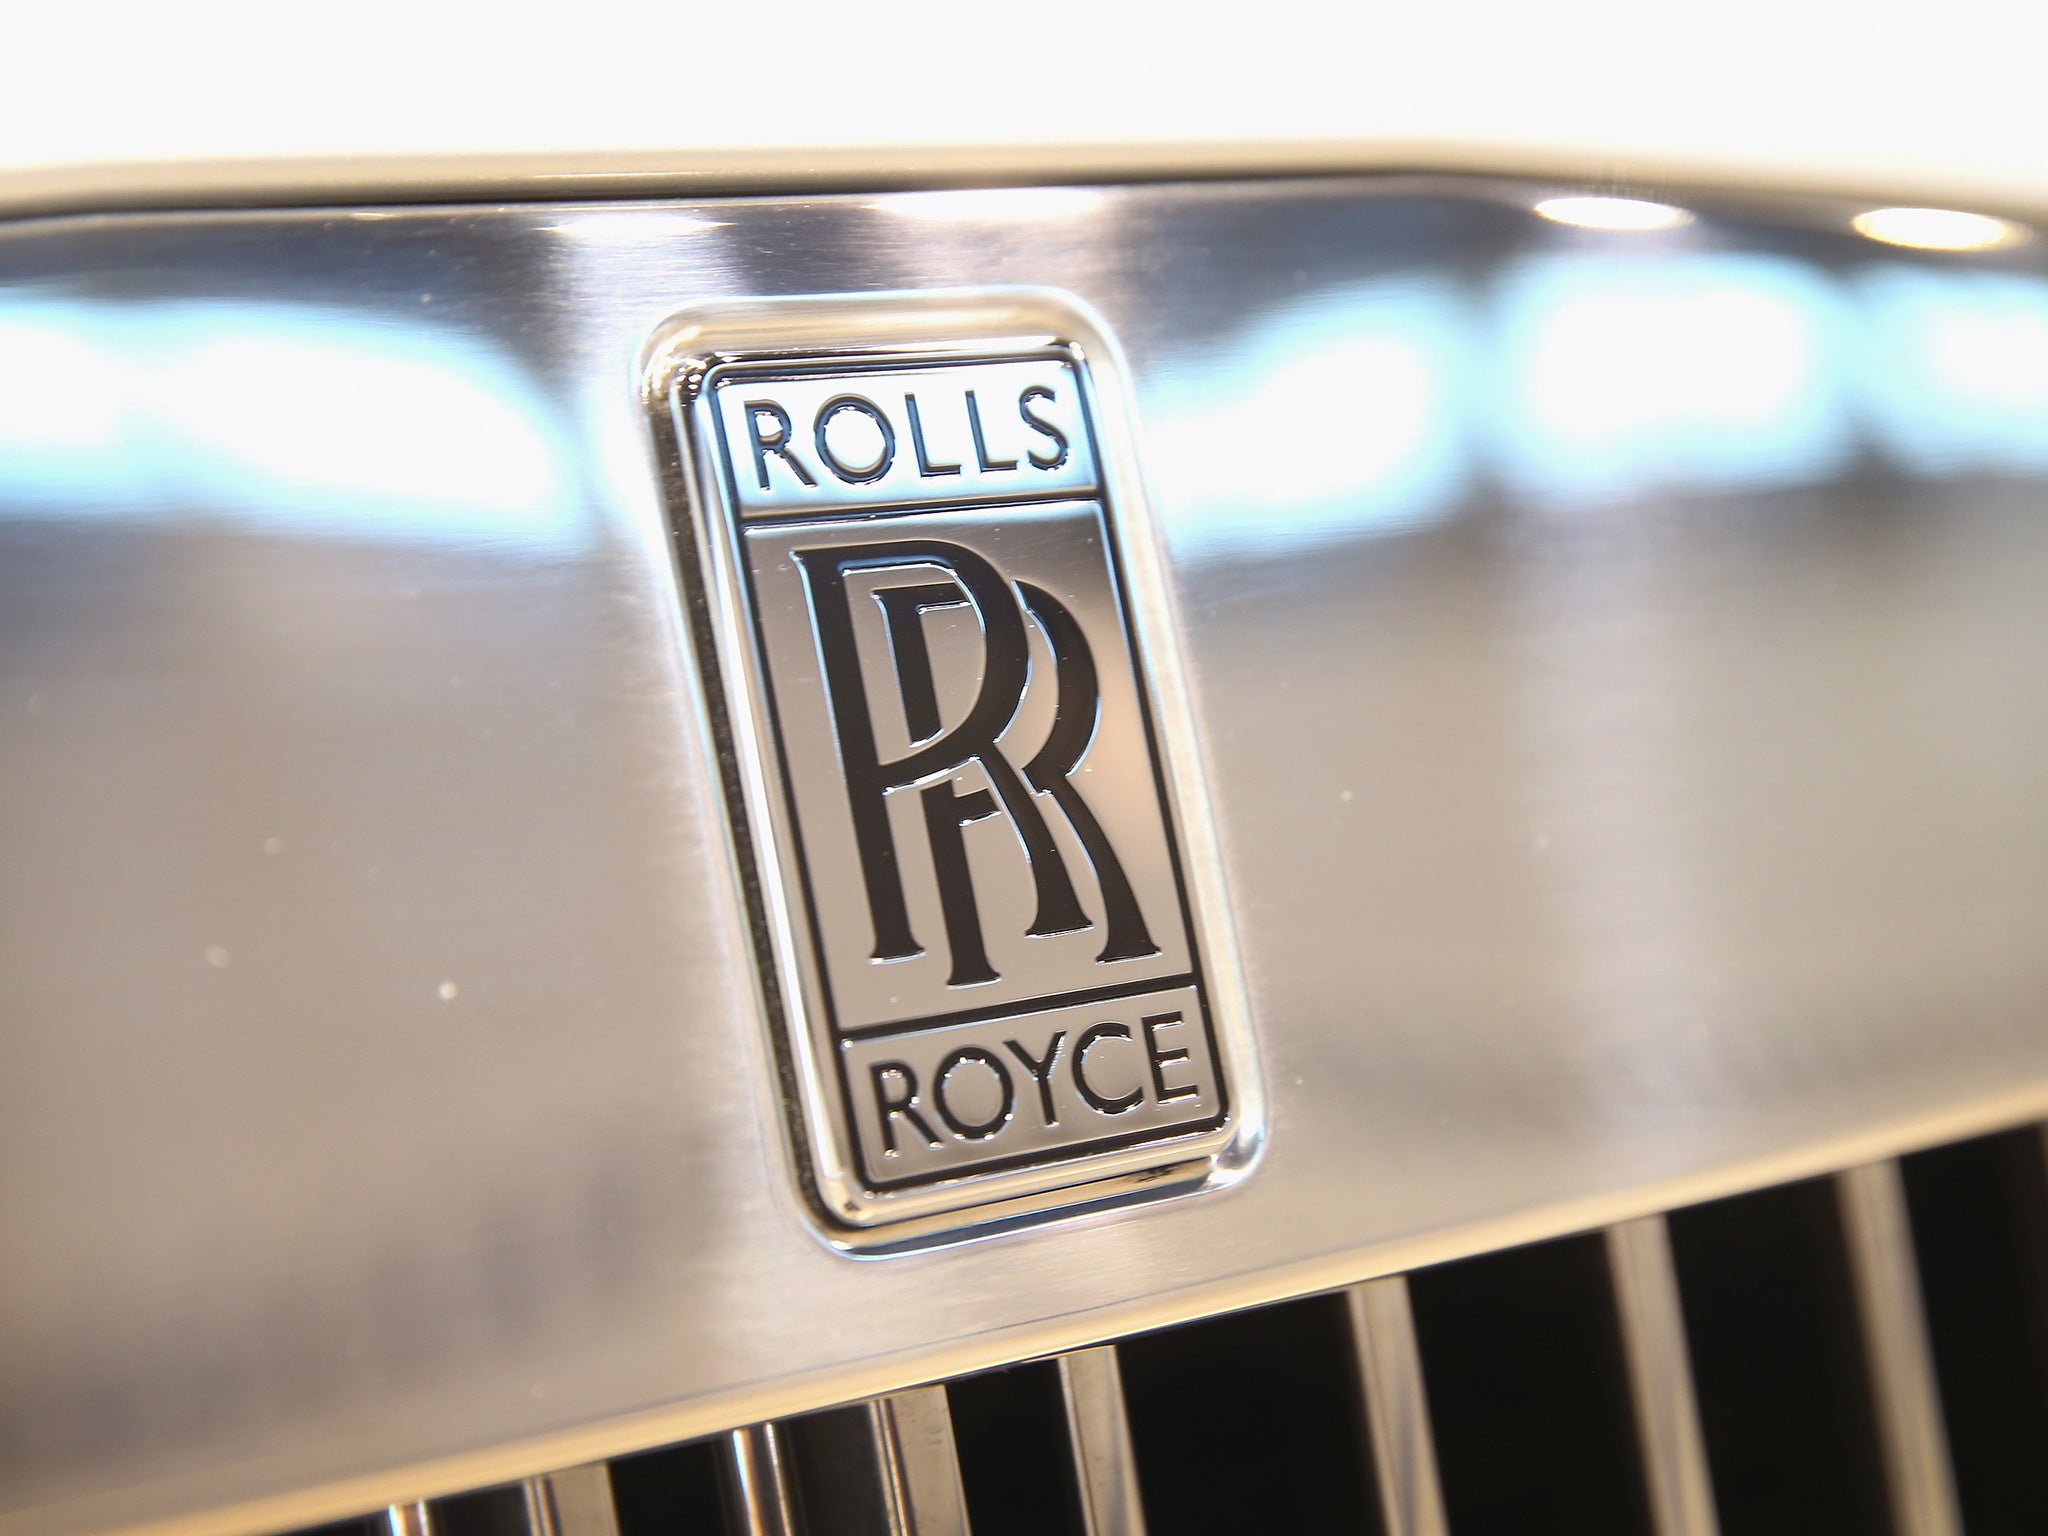 Rolls-Royce is on target to meet sales predictions despite Brexit worries